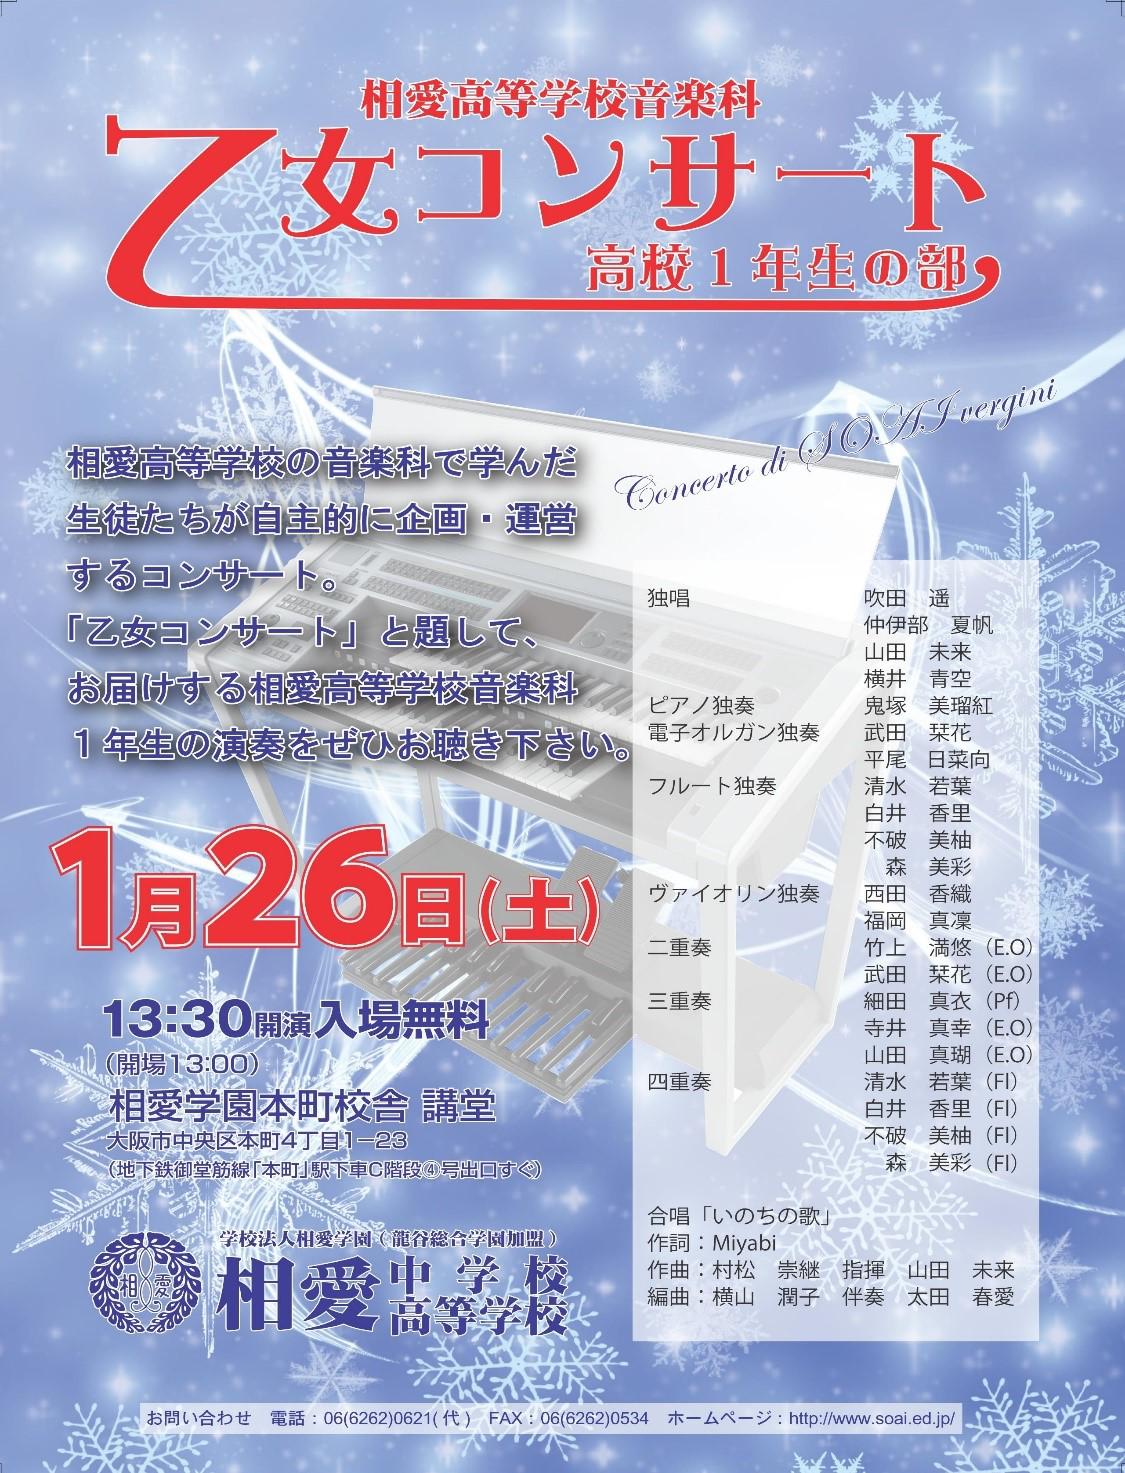 http://www.soai.ed.jp/information/concert/5.jpg